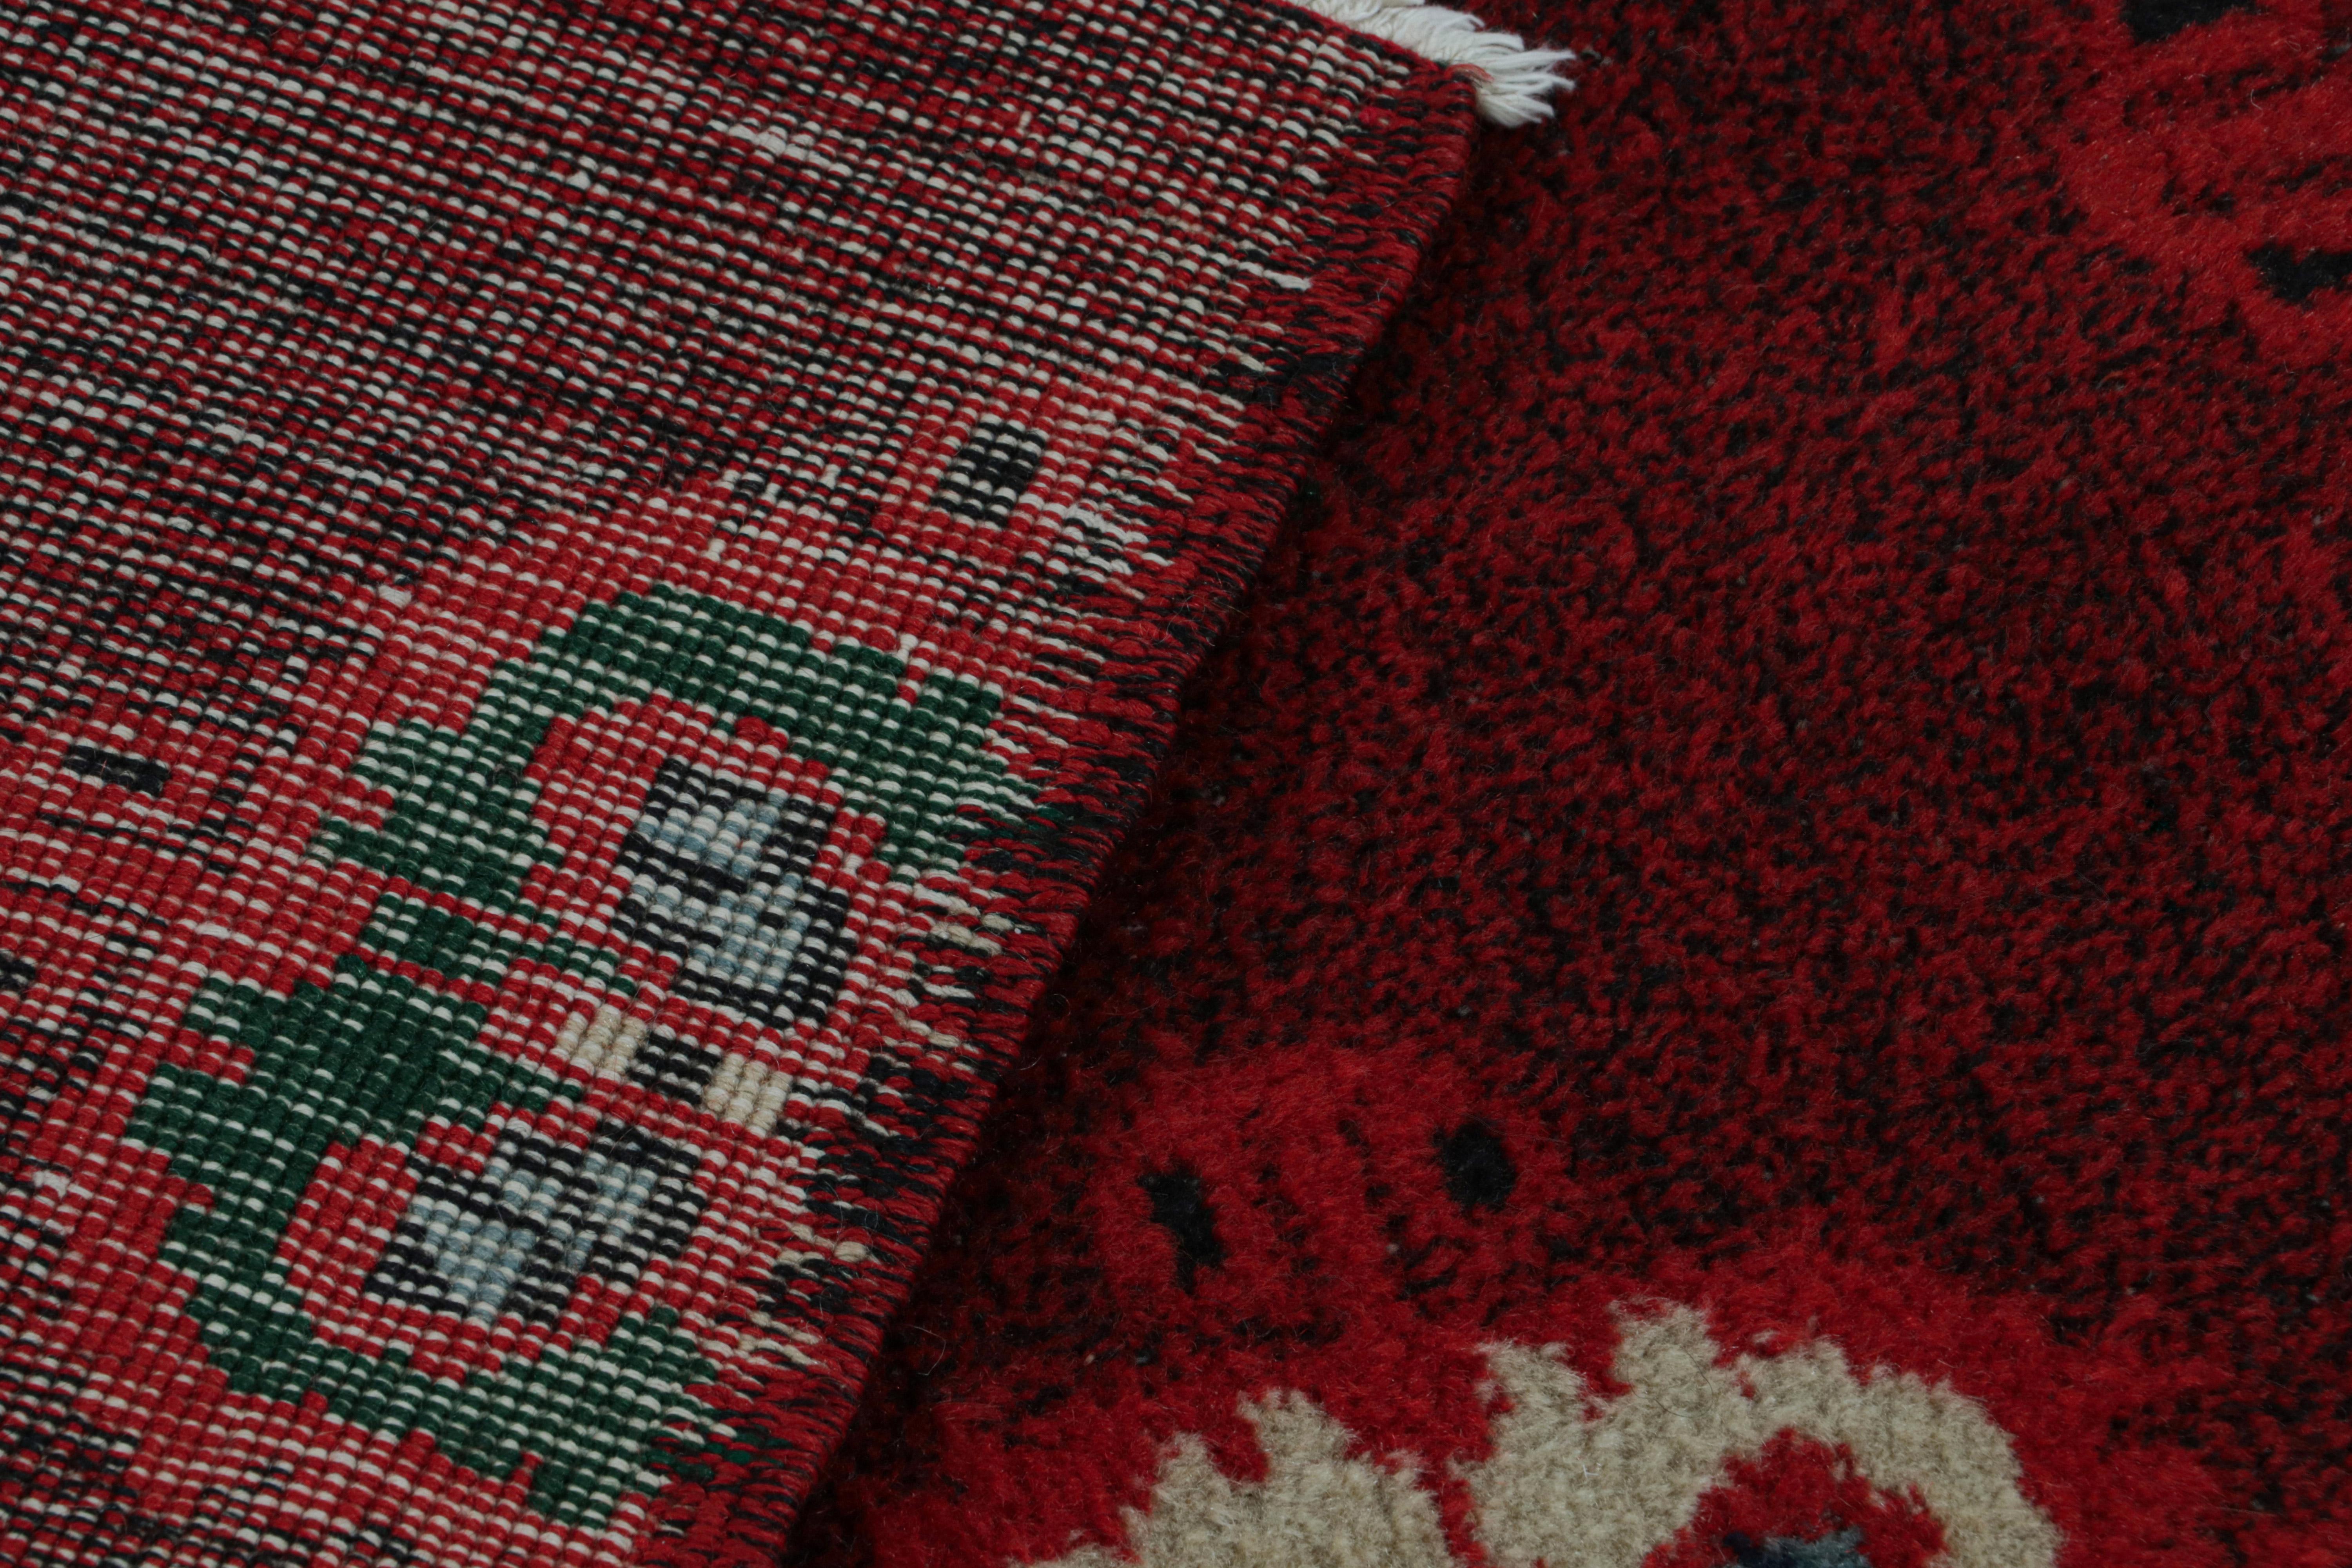 Wool Vintage Zeki Müren Rug in Red with Geometric Patterns, from Rug & Kilim For Sale